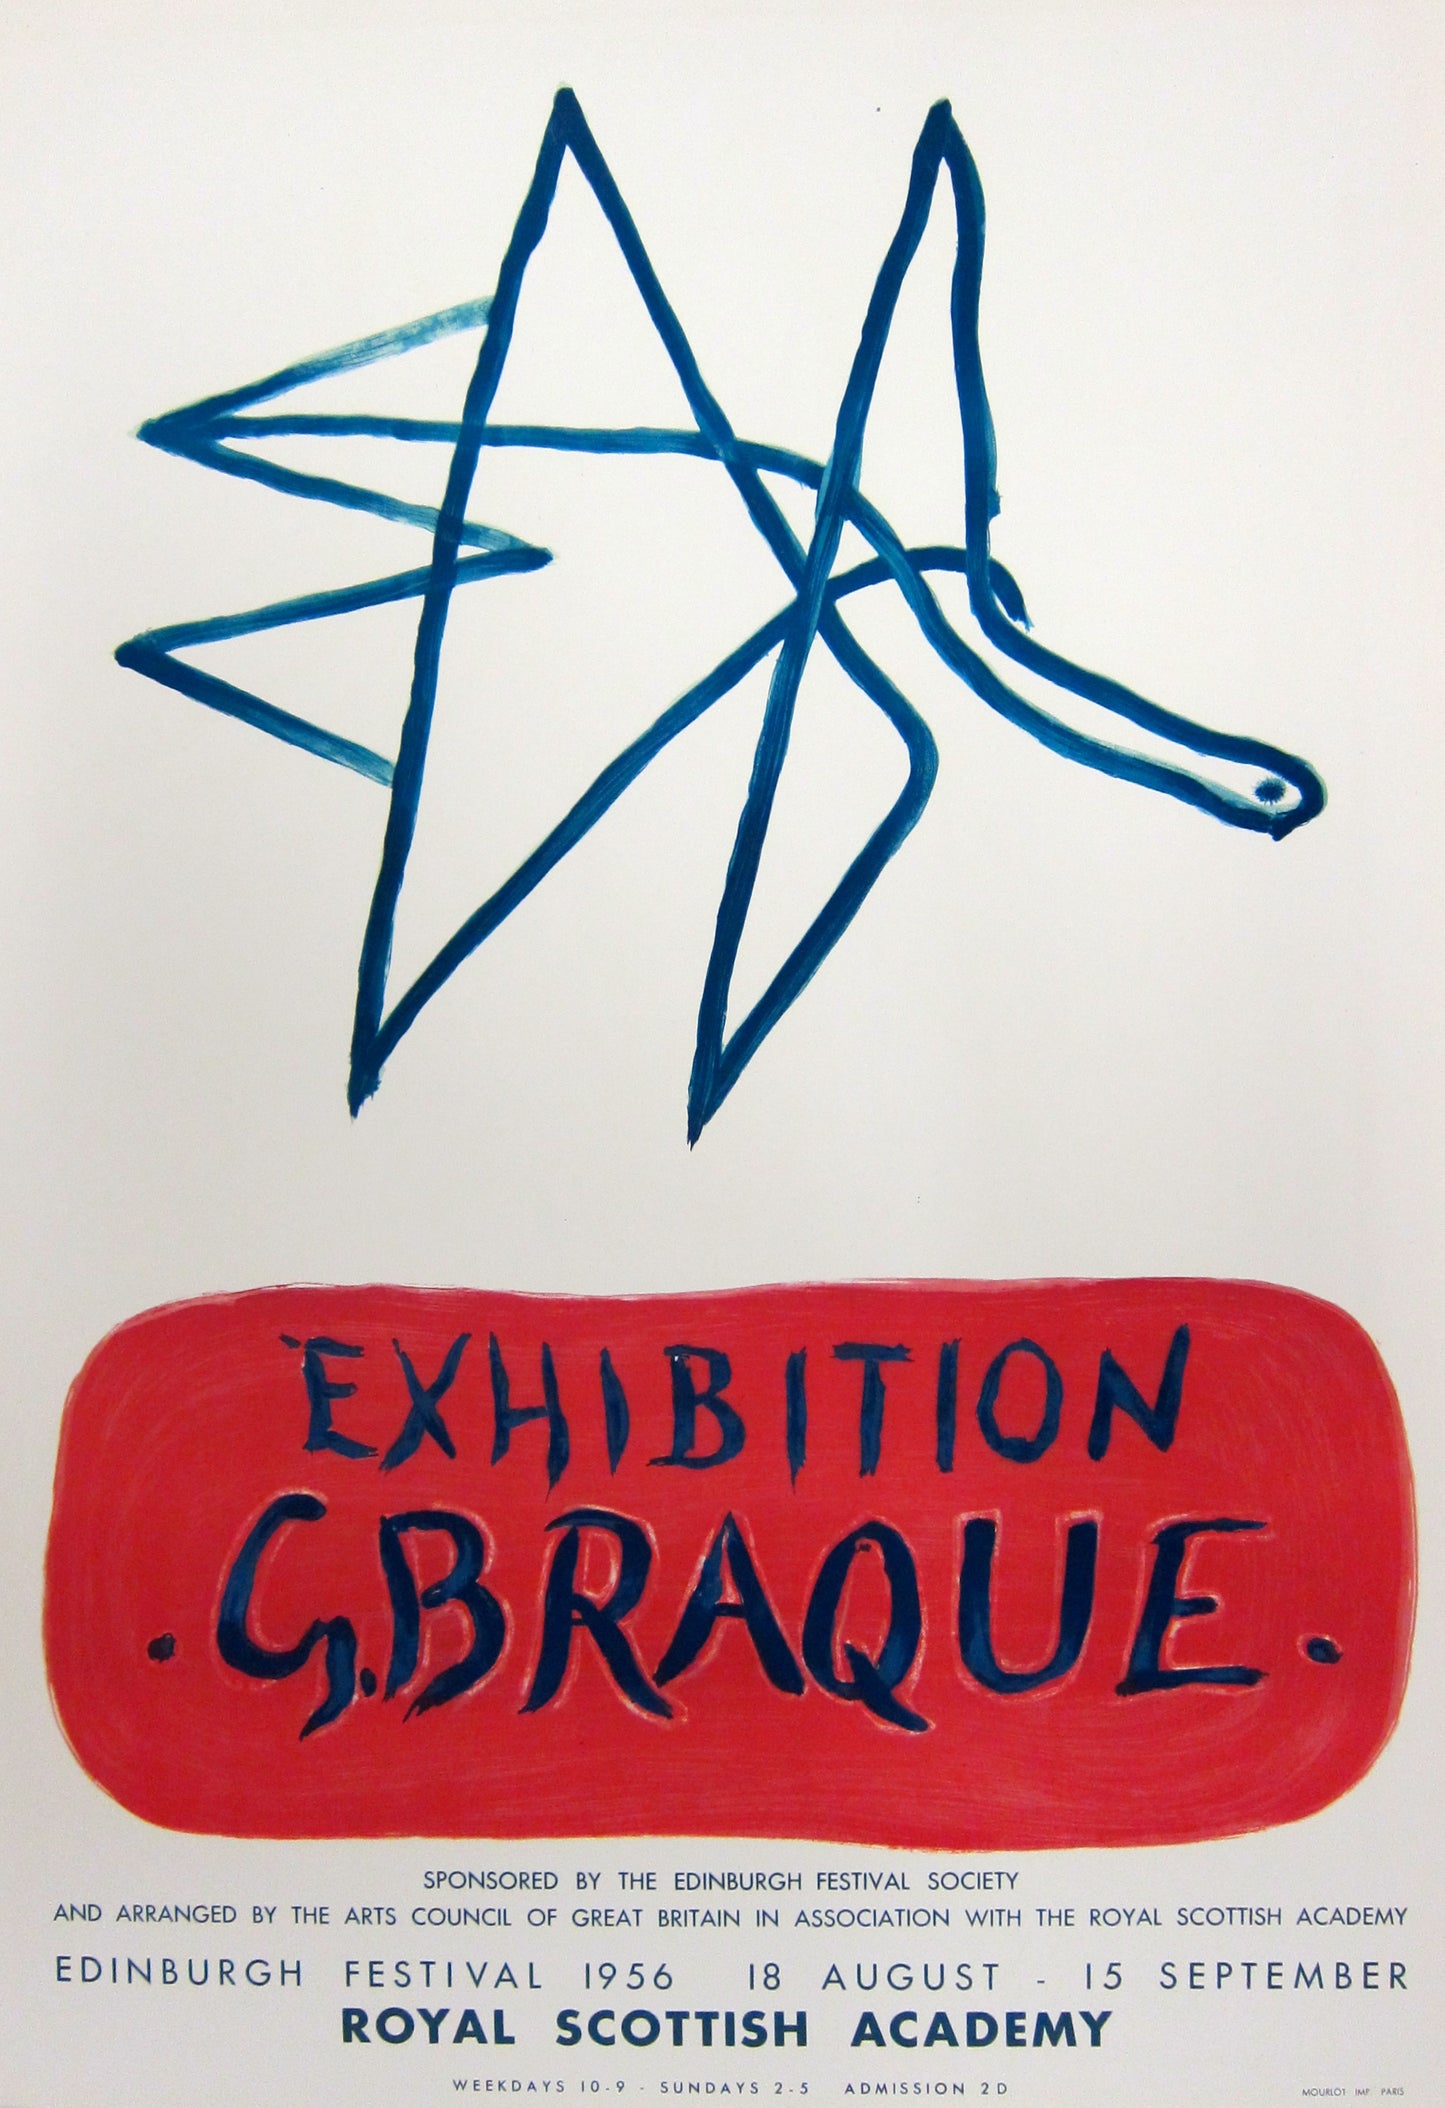 L'oiseau - Royal Scottish Academy (after) Georges Braque, 1956 - Mourlot Editions - Fine_Art - Poster - Lithograph - Wall Art - Vintage - Prints - Original